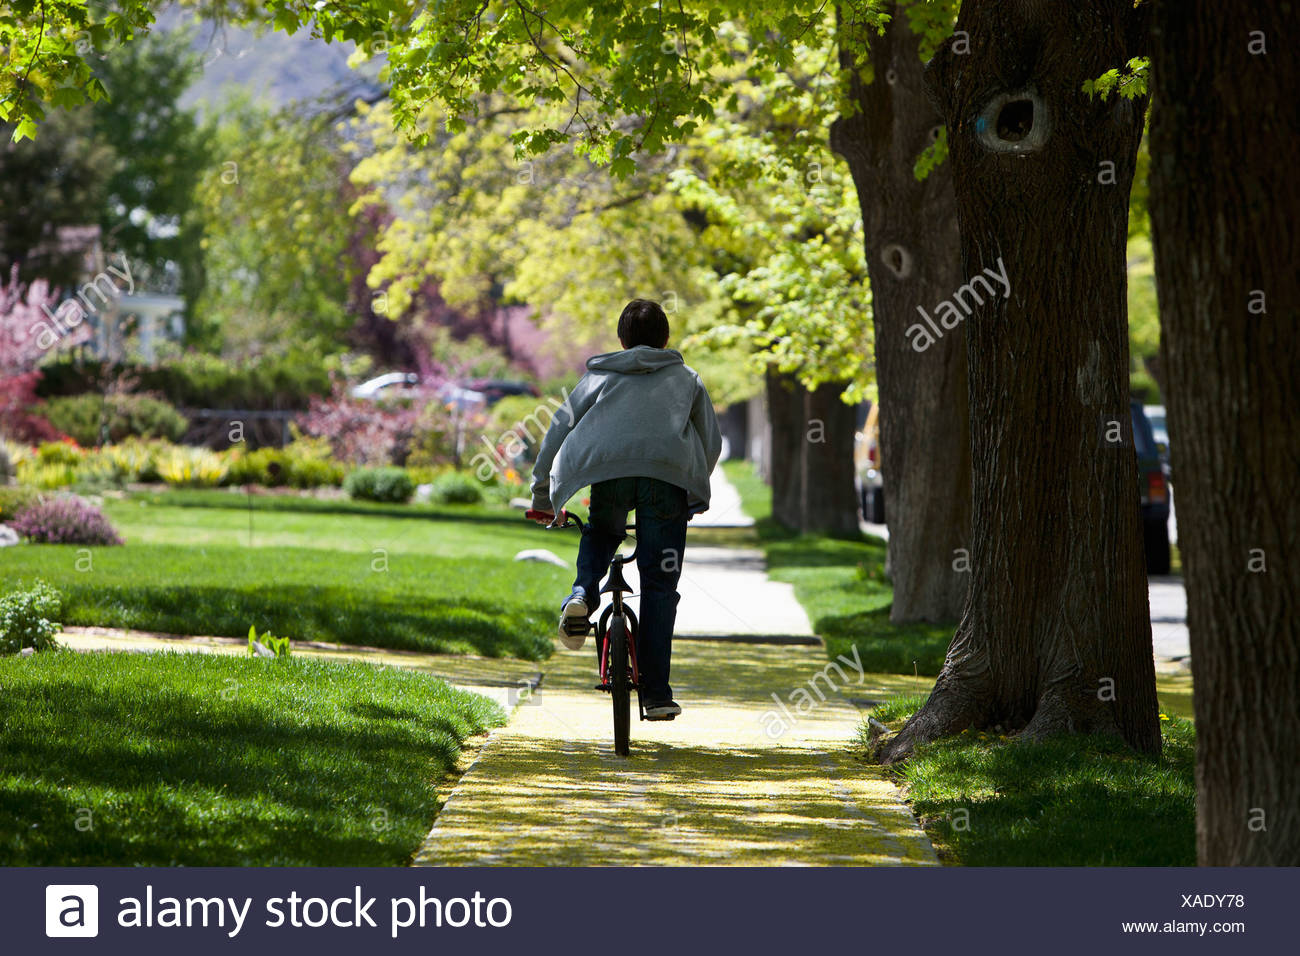 riding bike on footpath